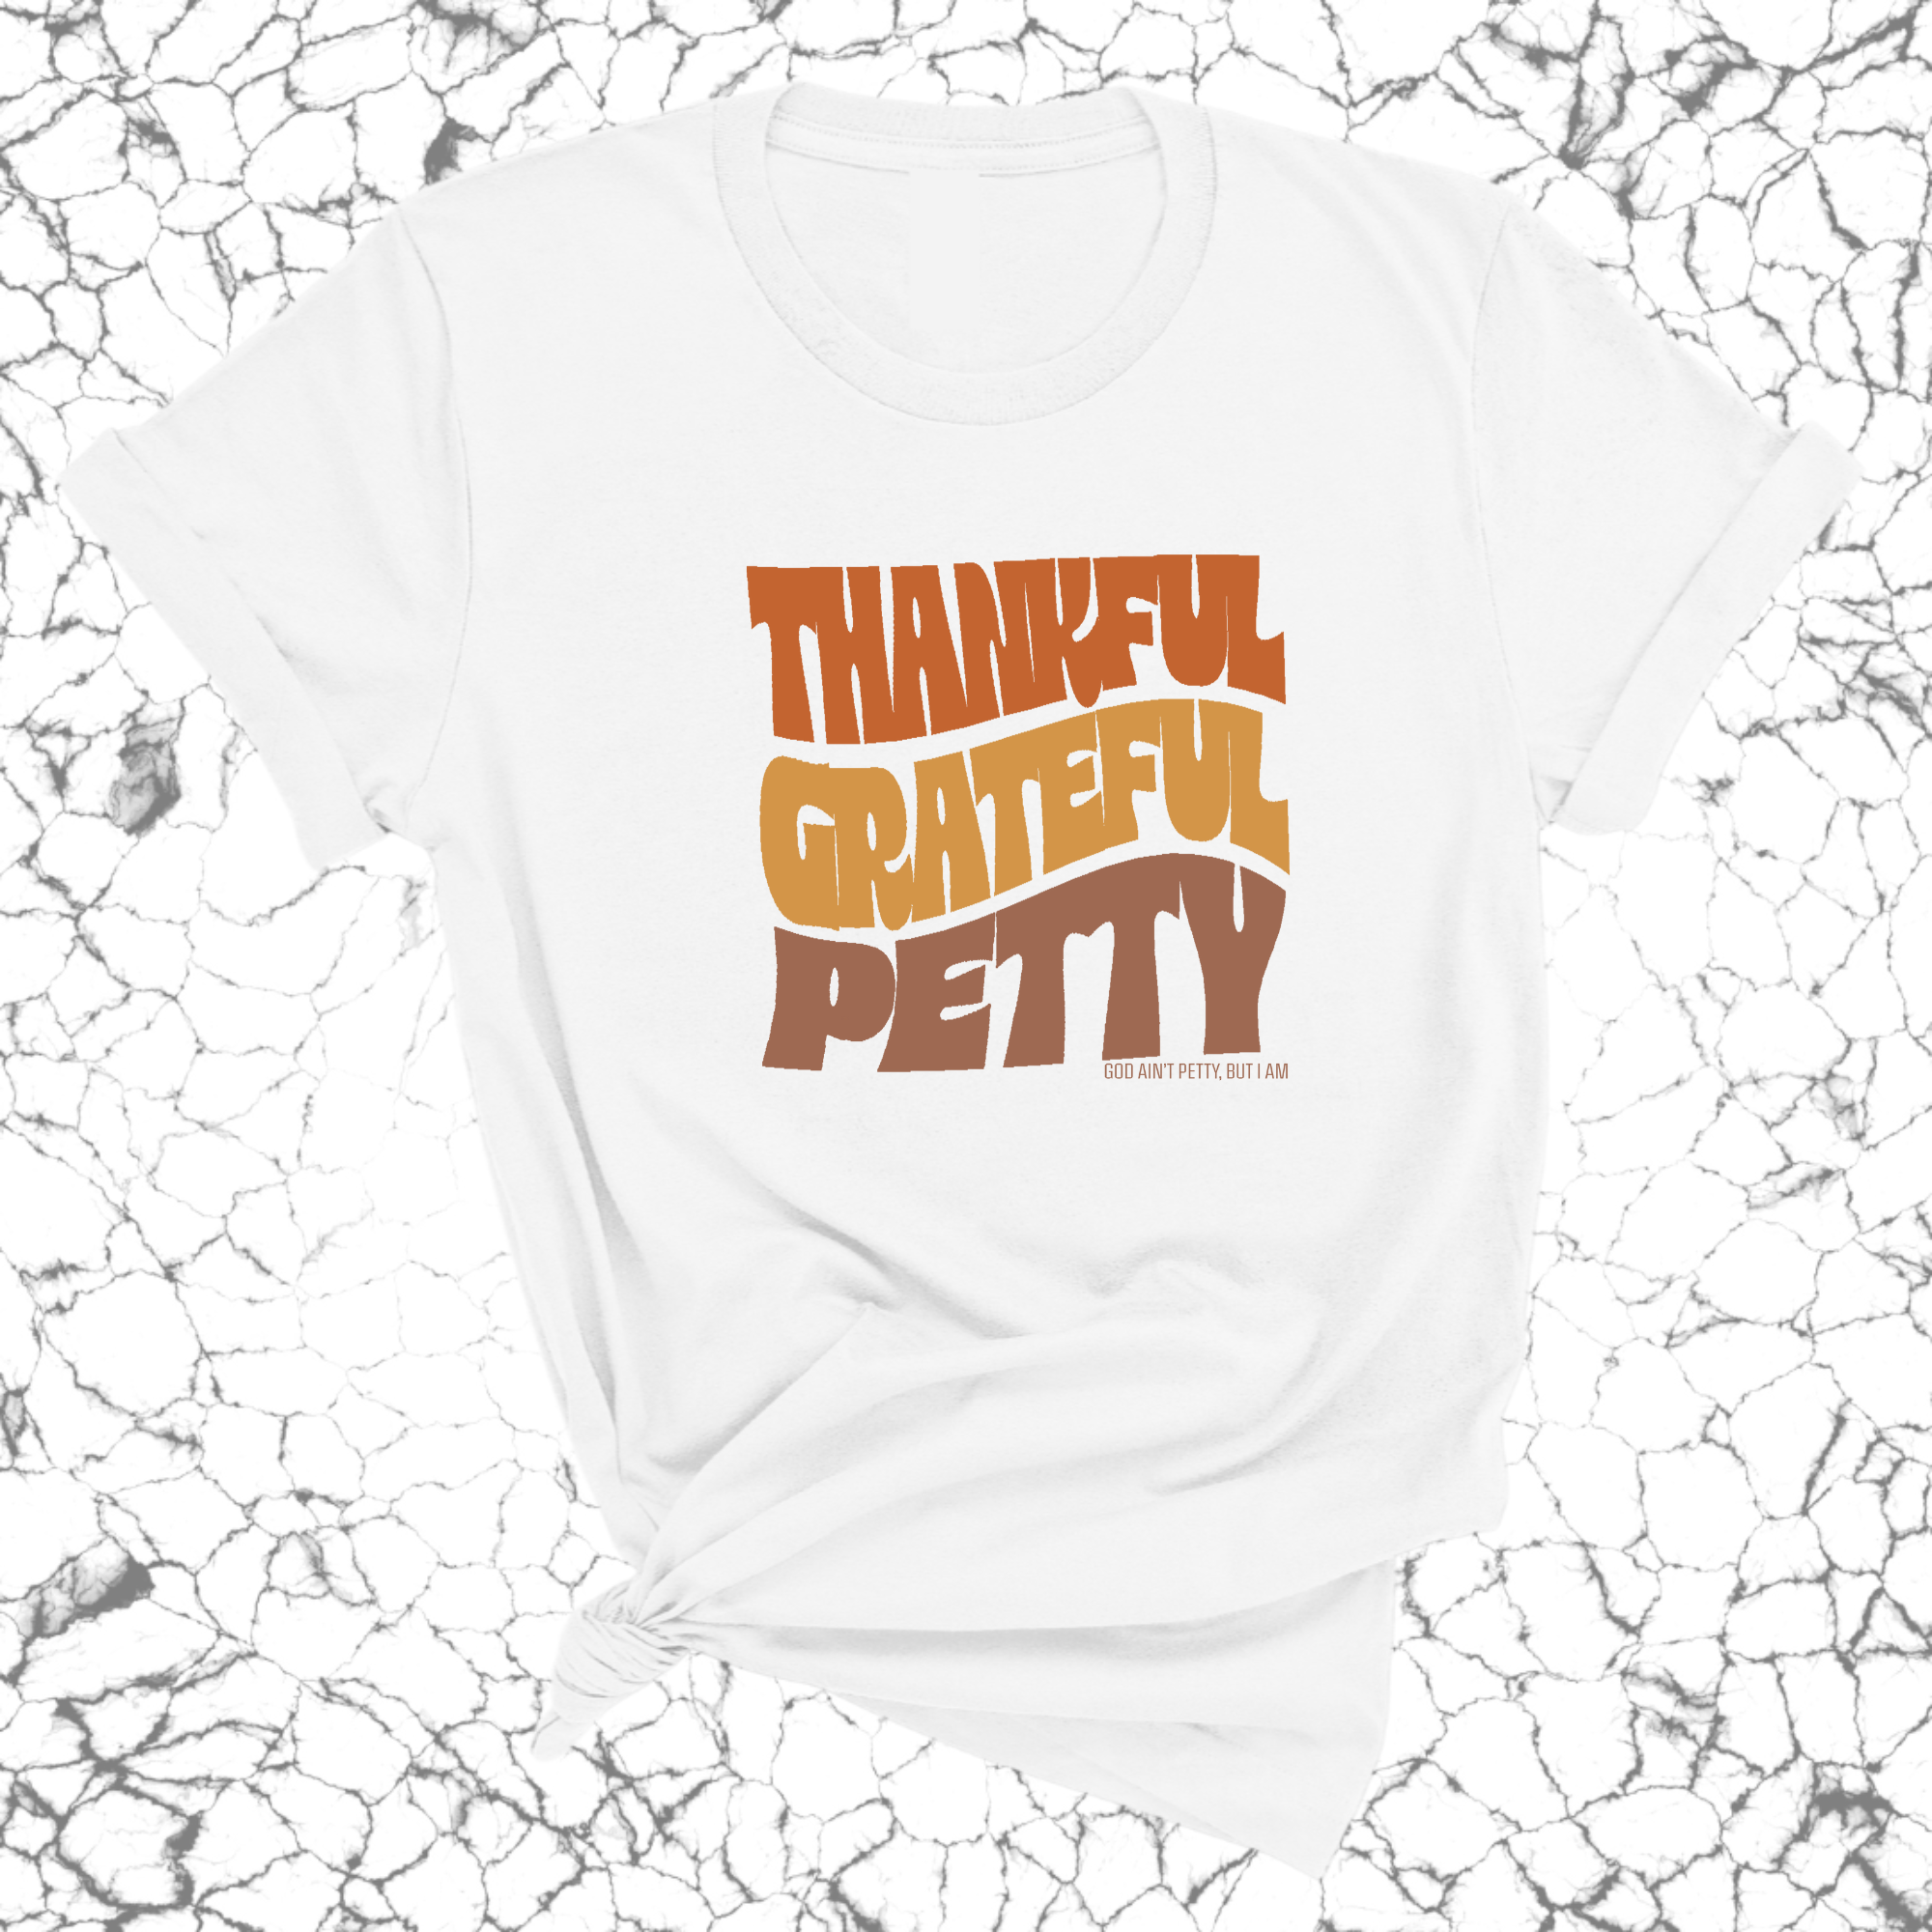 Thankful Grateful Petty Fall Colors Unisex Tee-T-Shirt-The Original God Ain't Petty But I Am